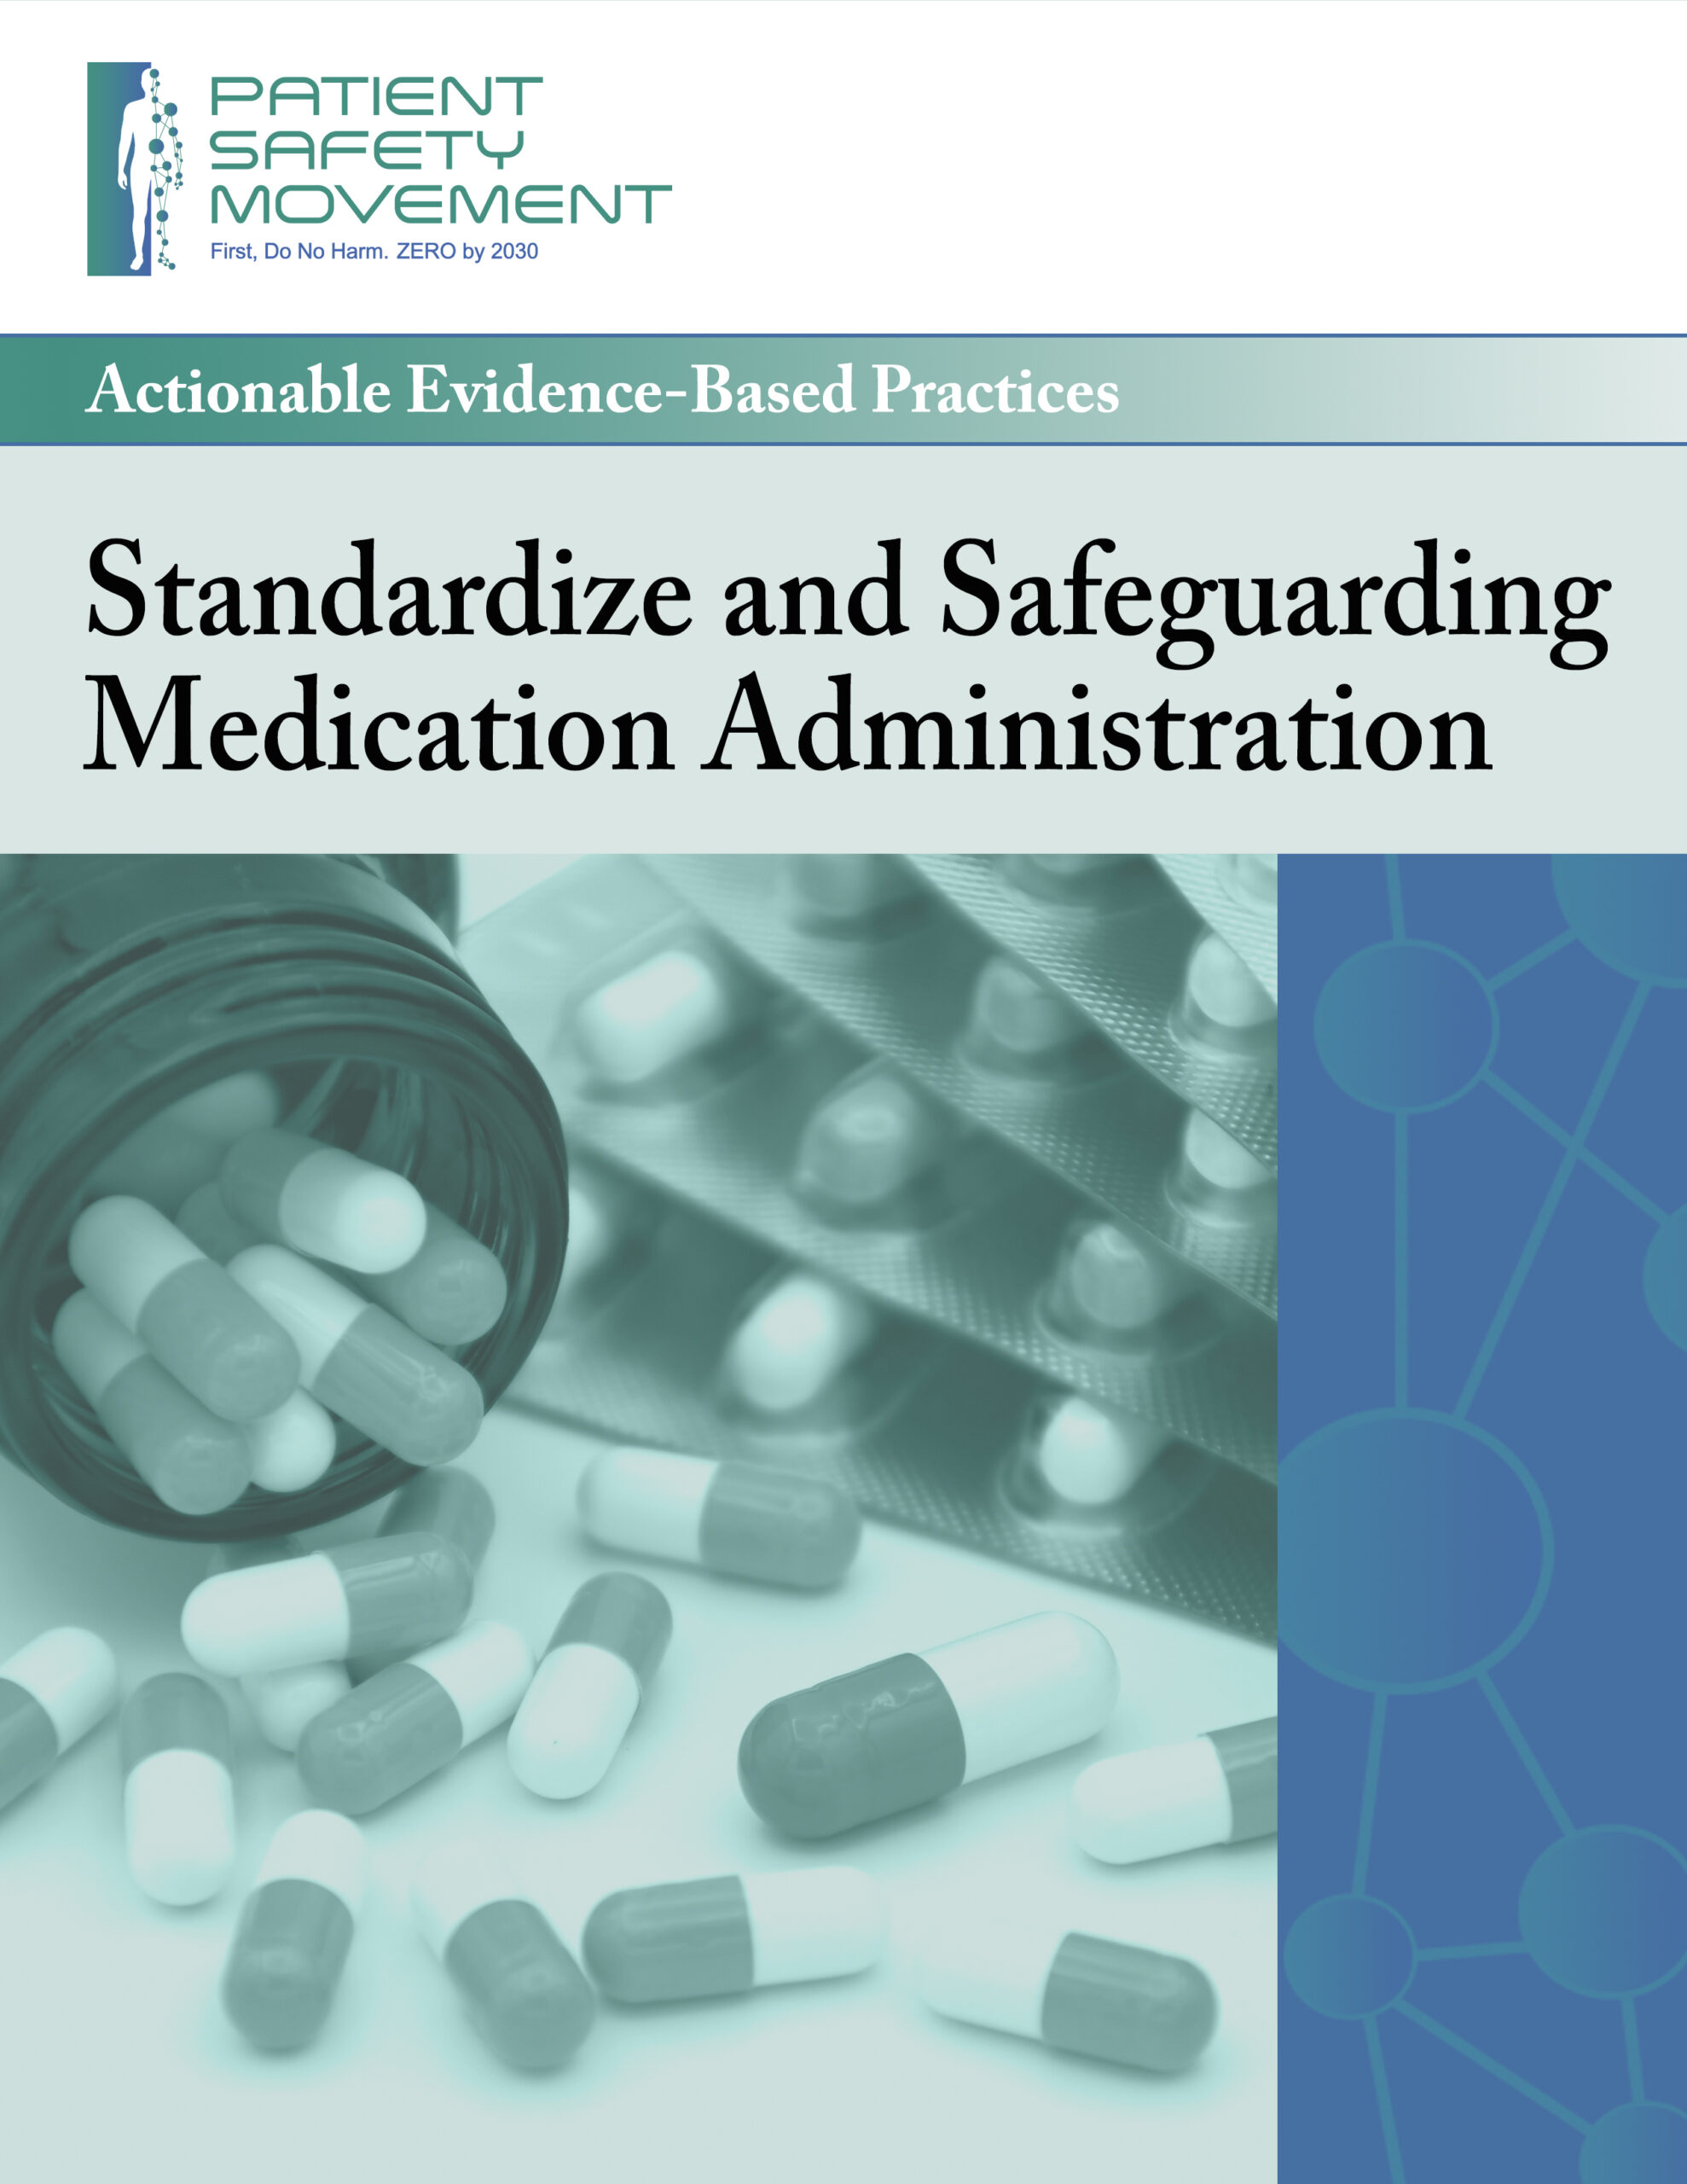 Standardize and Safeguard Medication Administration